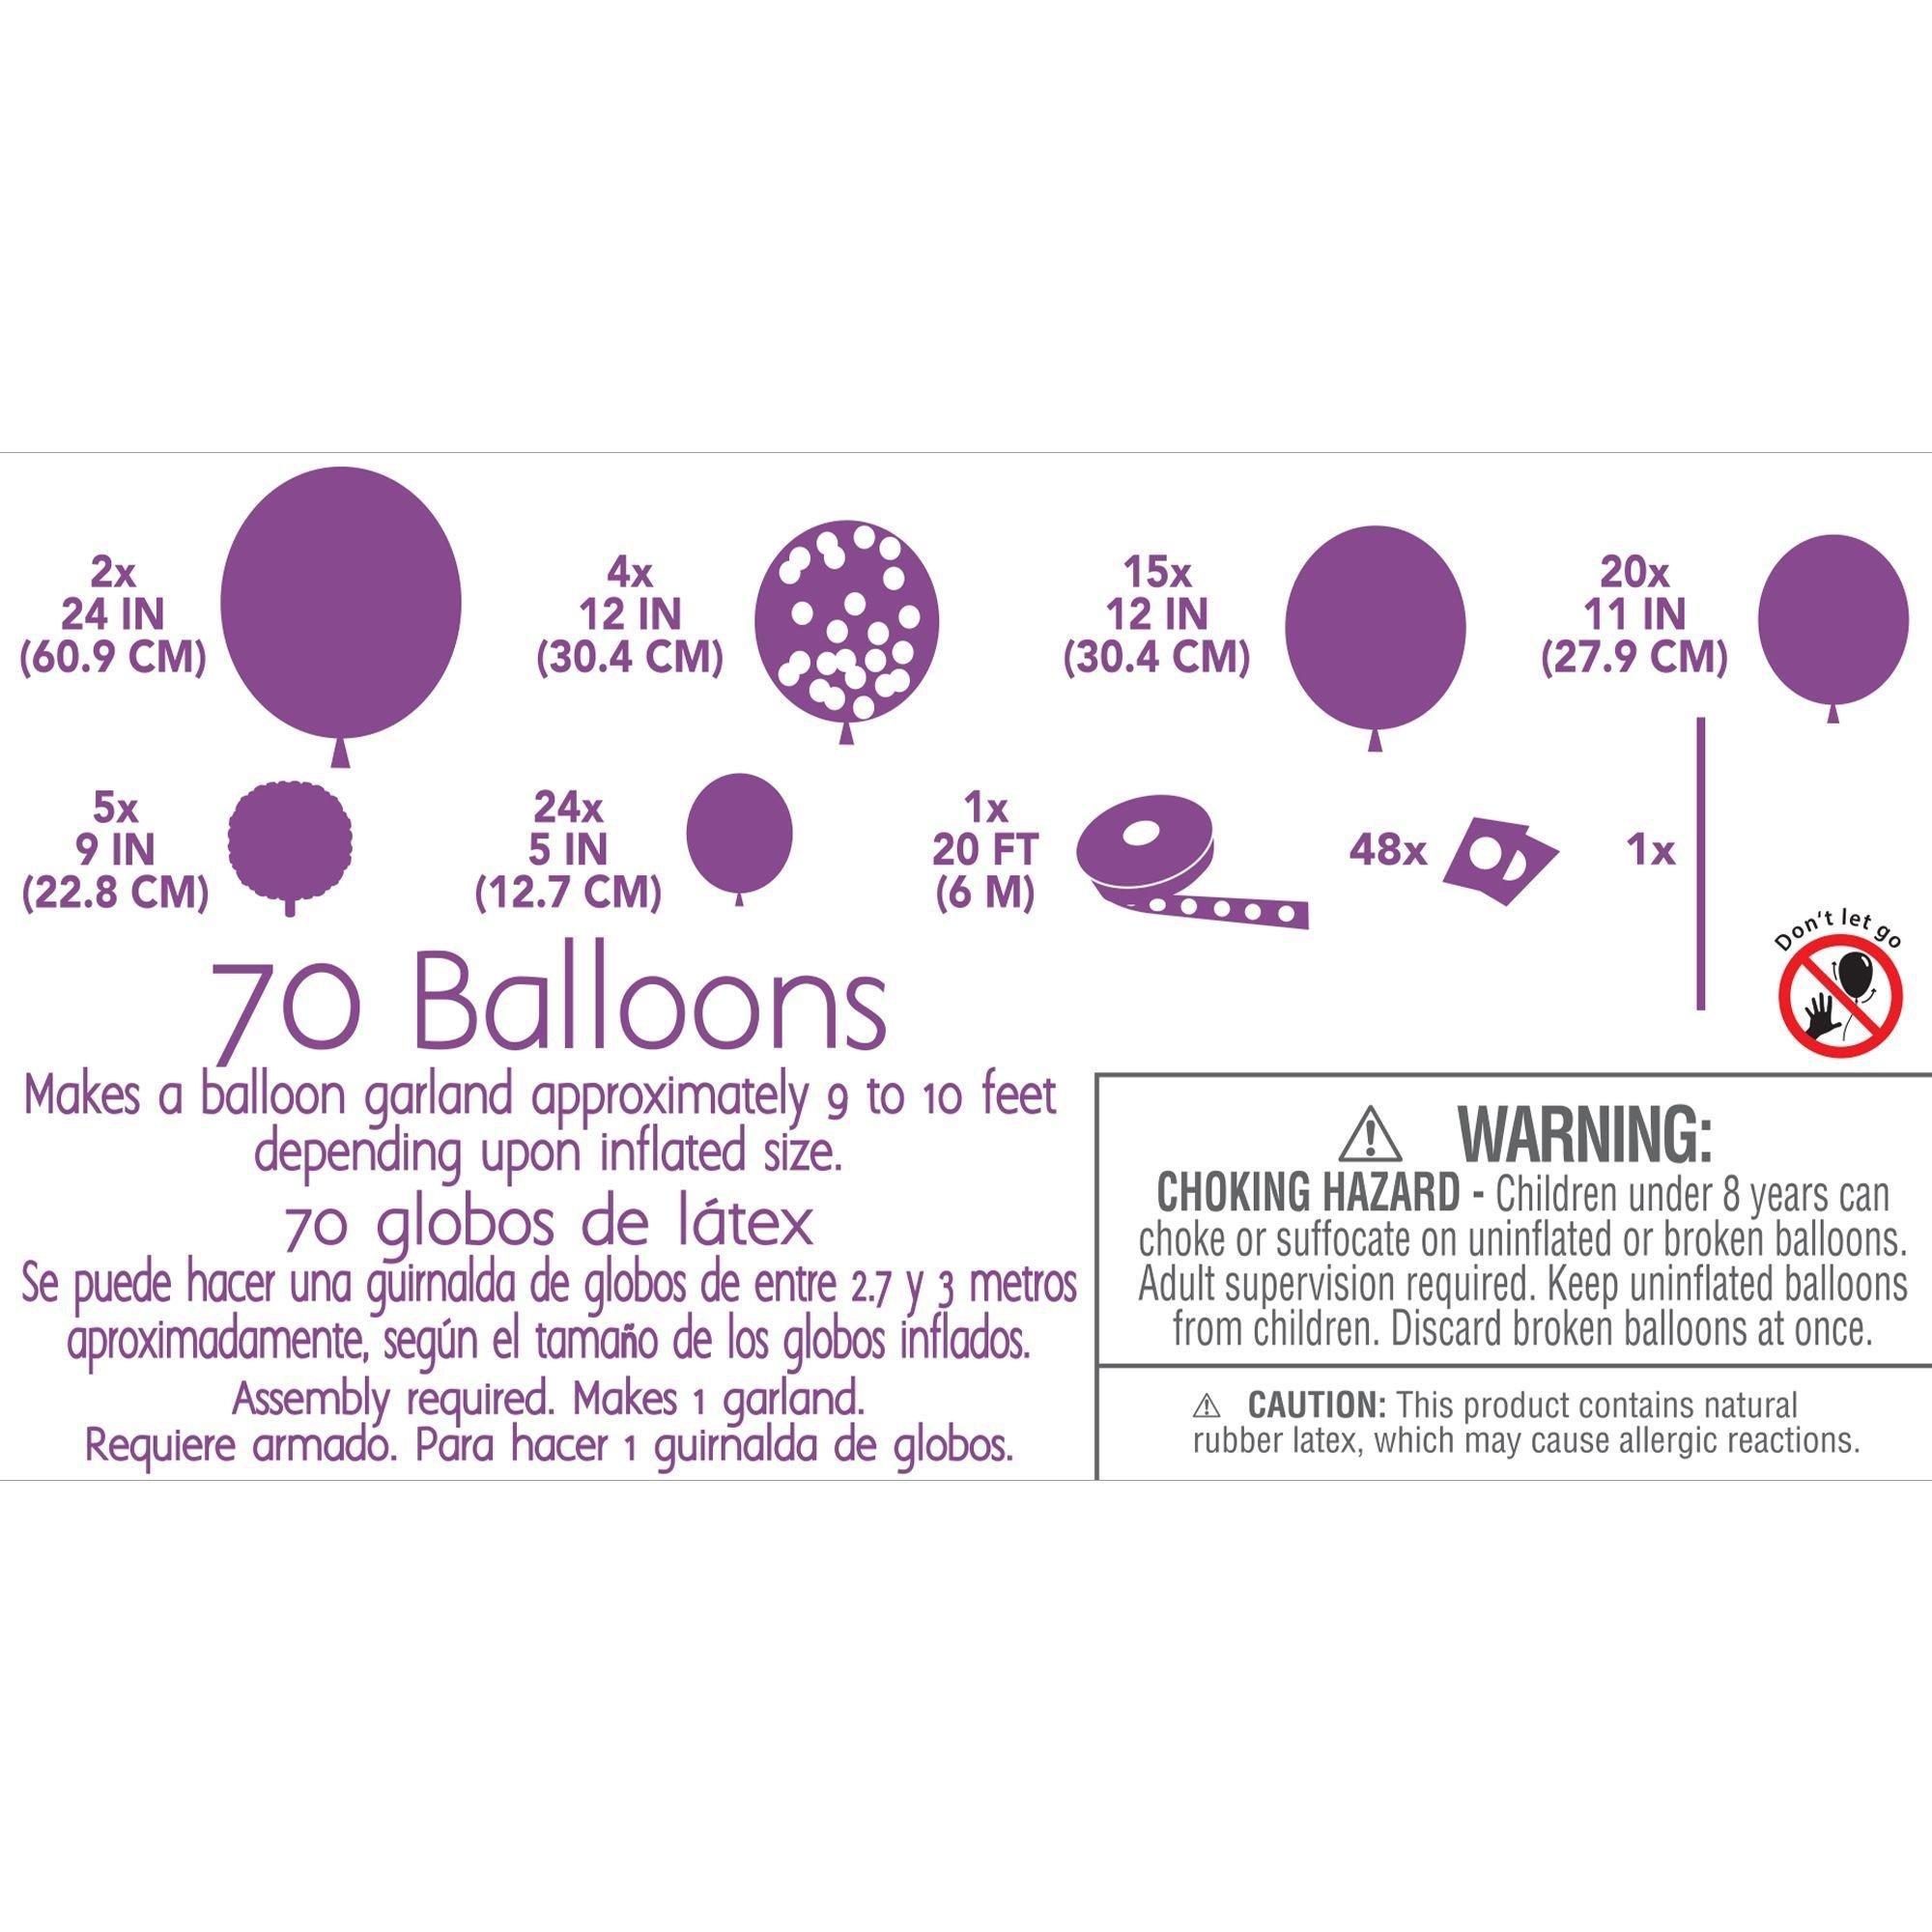 24 Balloon Sticks  Fiesta Party Supplies